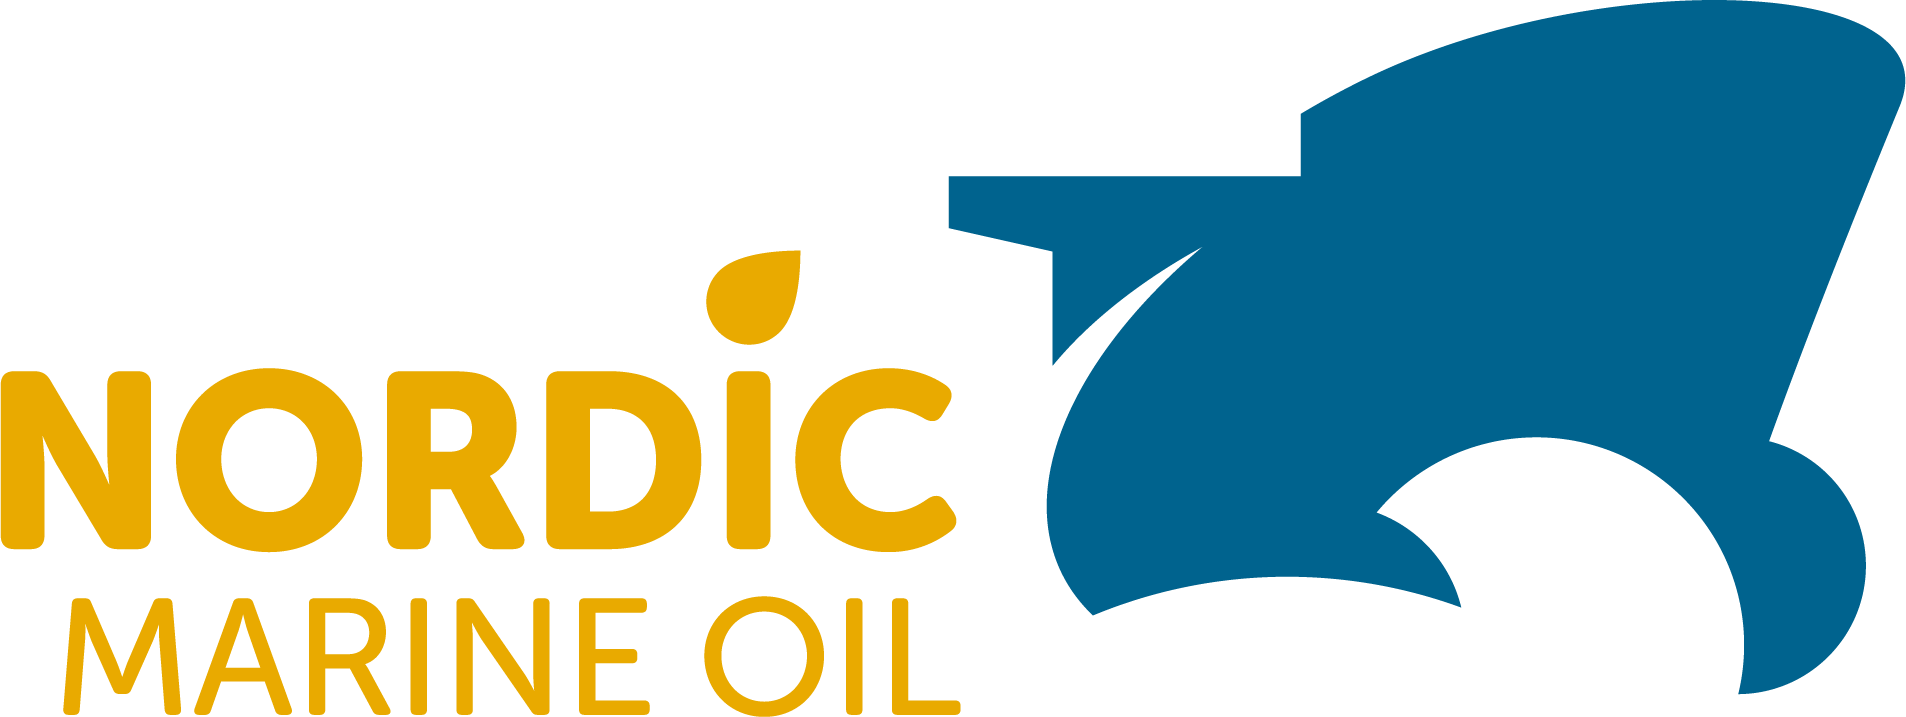 Nordic Marine Oil 4F